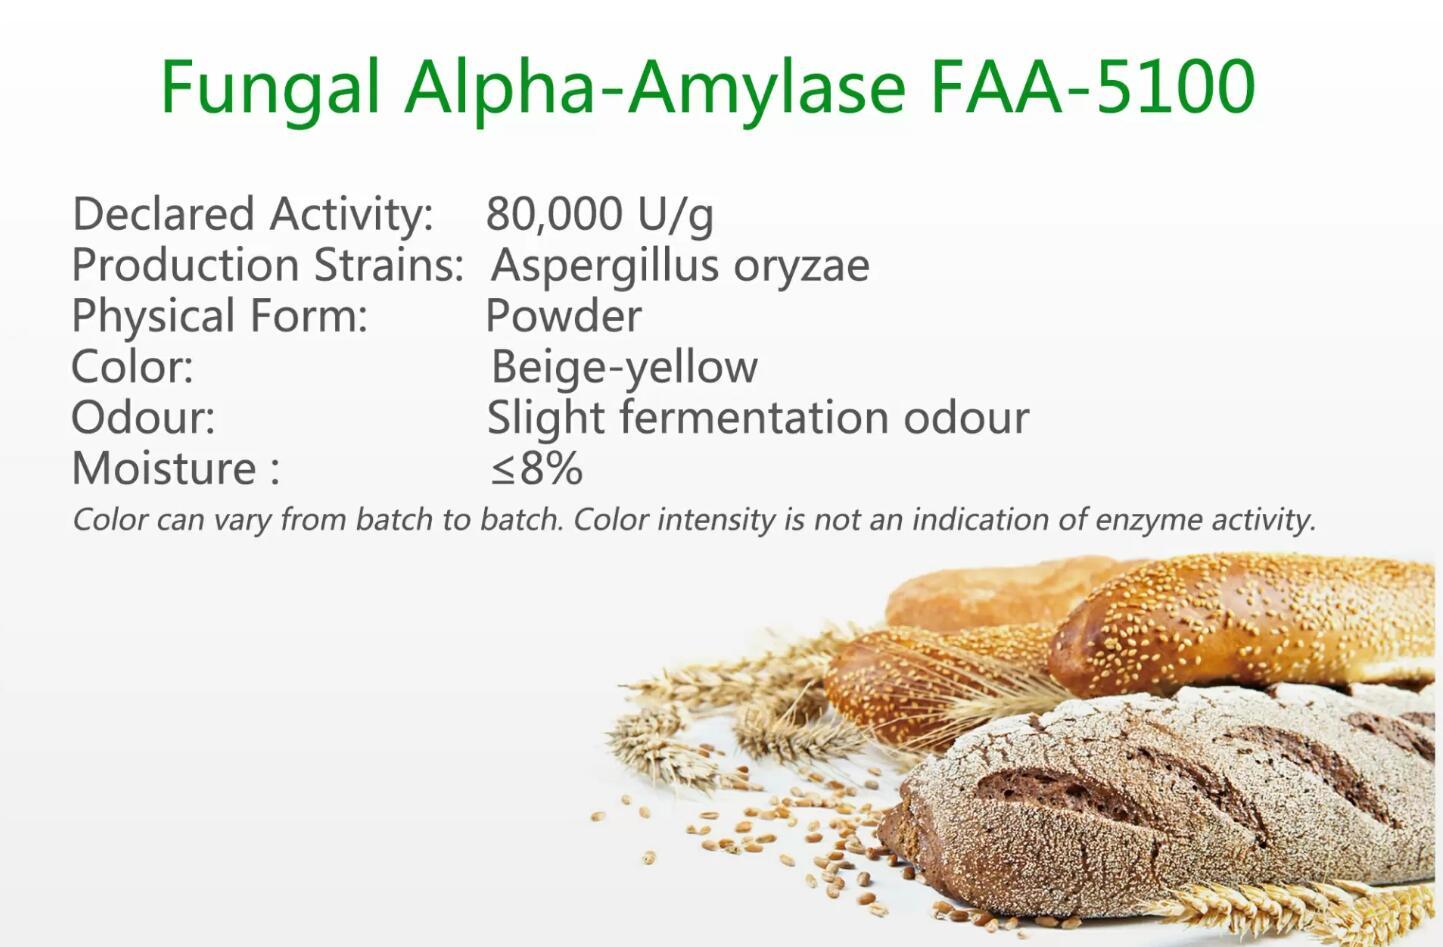 Fungal Alpha-Amylase FAA-5100